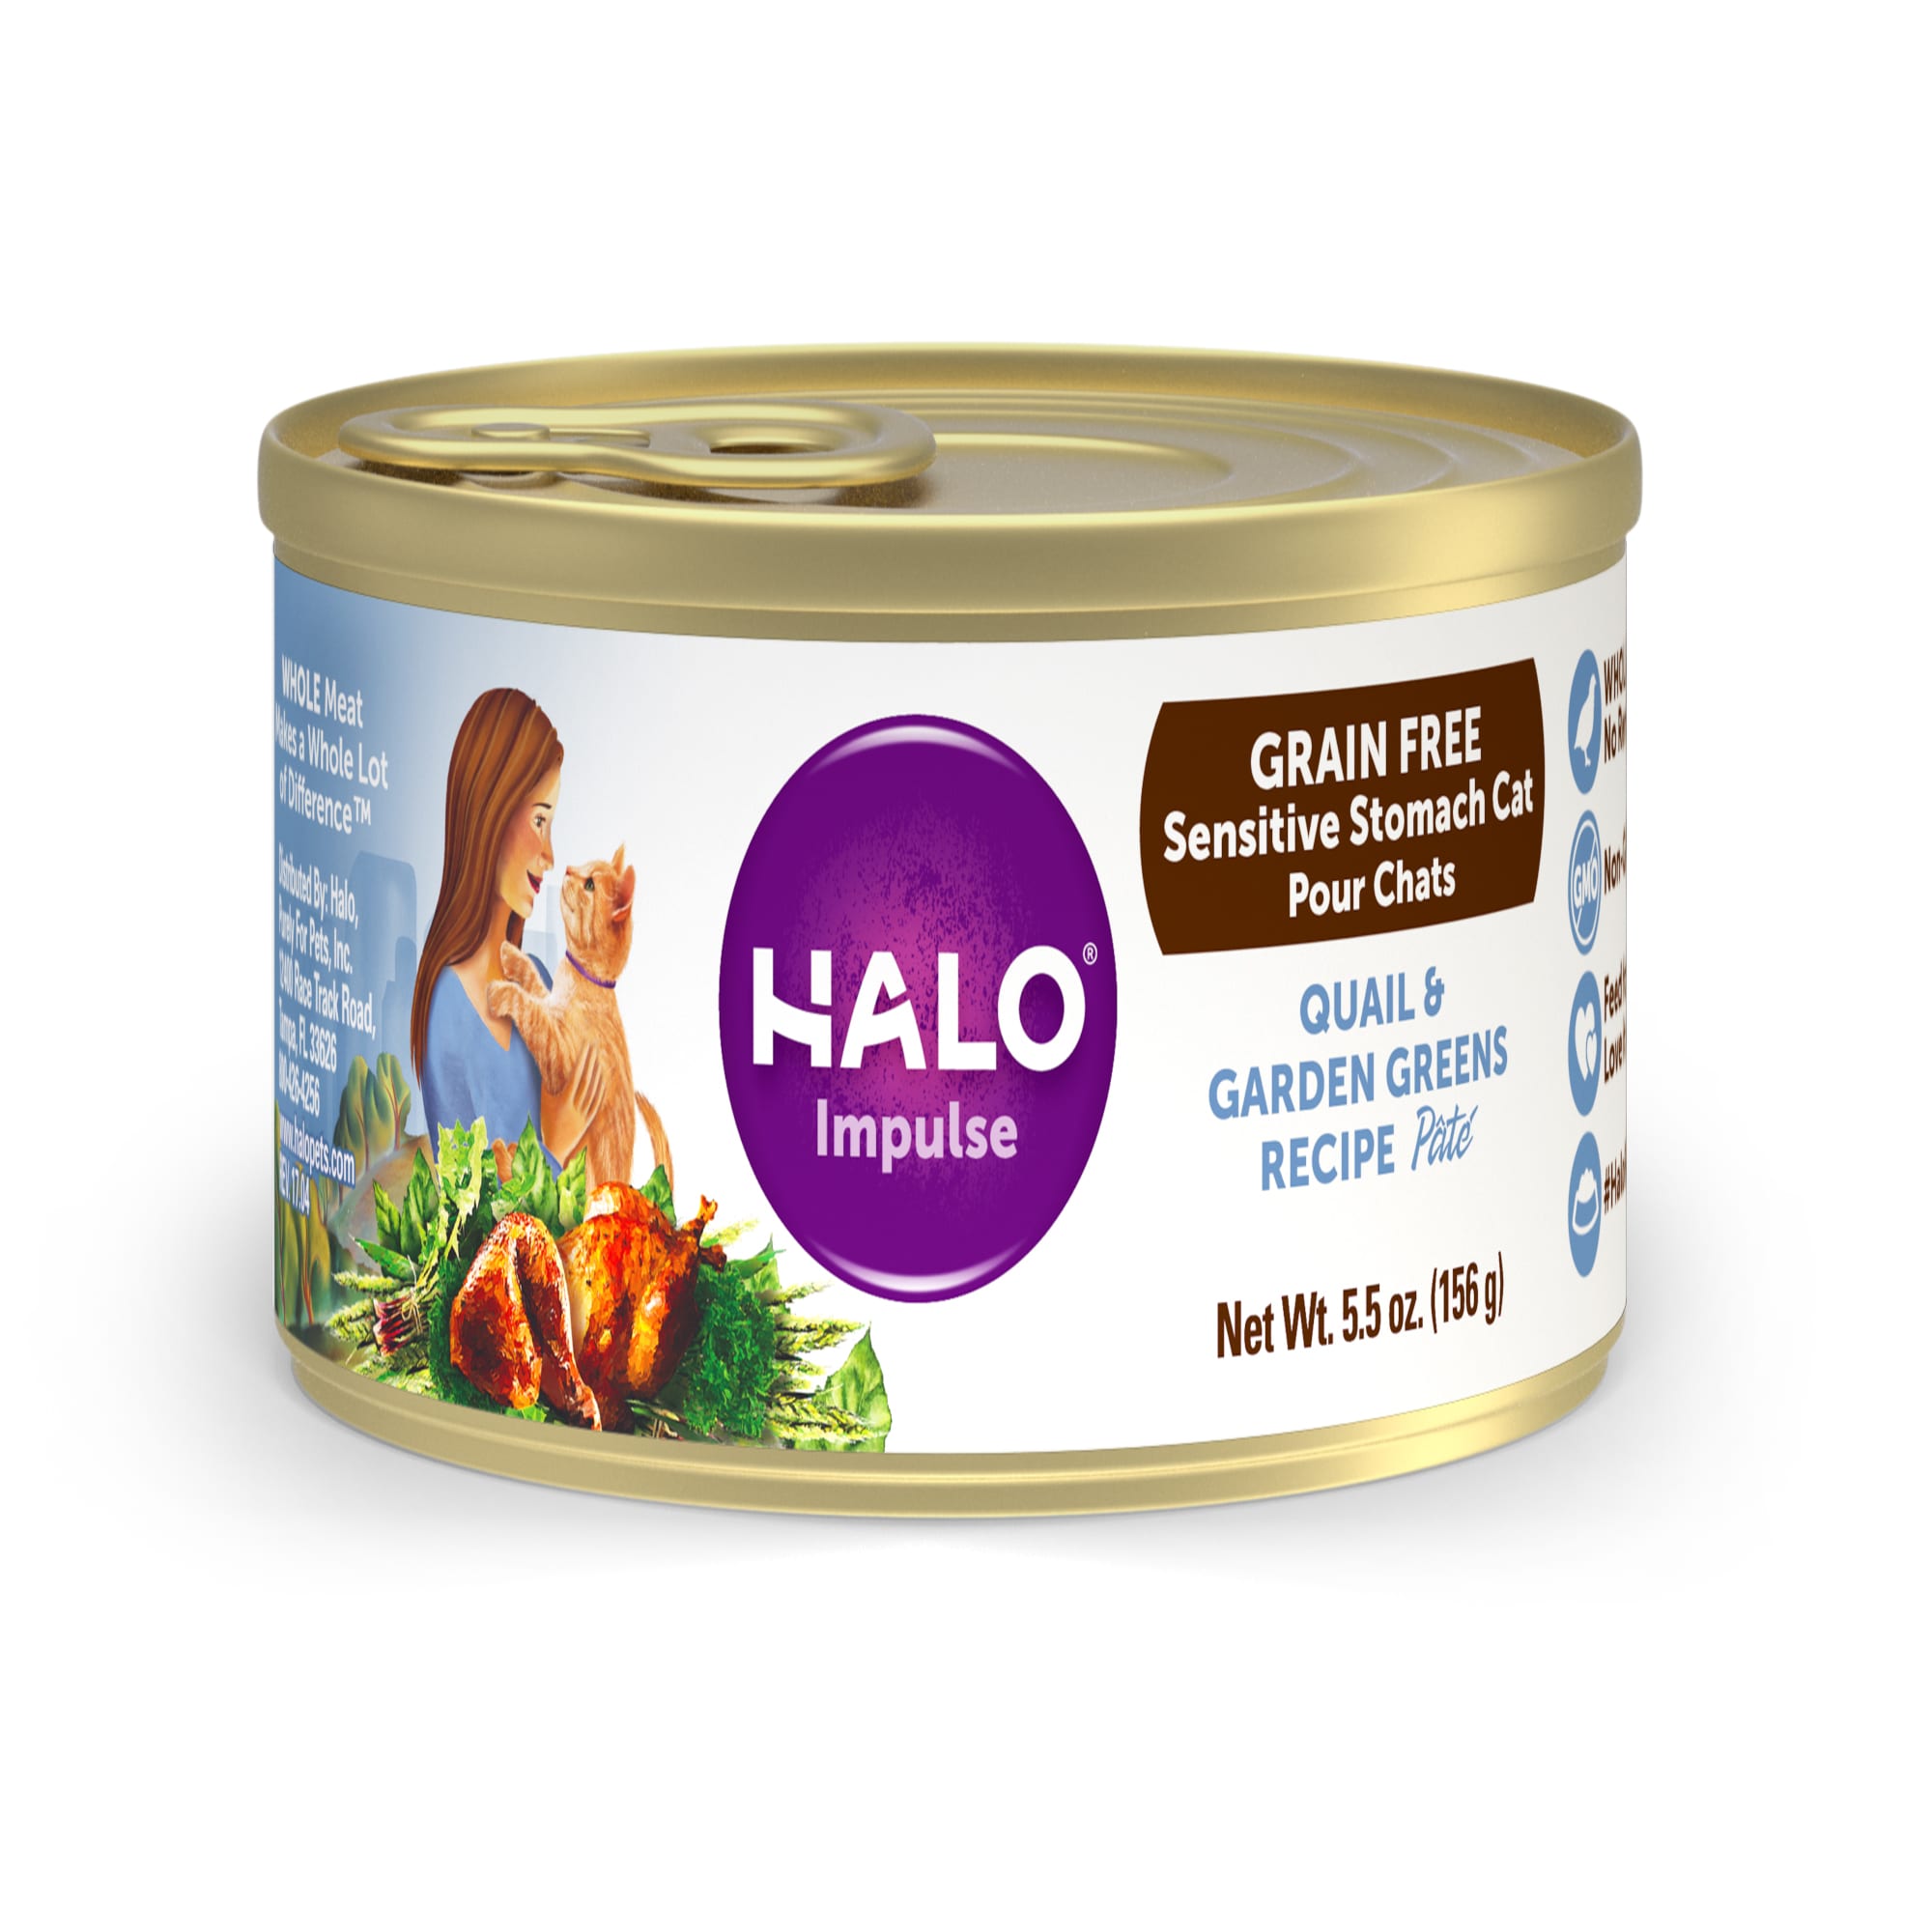 Halo Impulse Grain Free Quail & Garden Greens Canned Cat Food, 5.5 oz